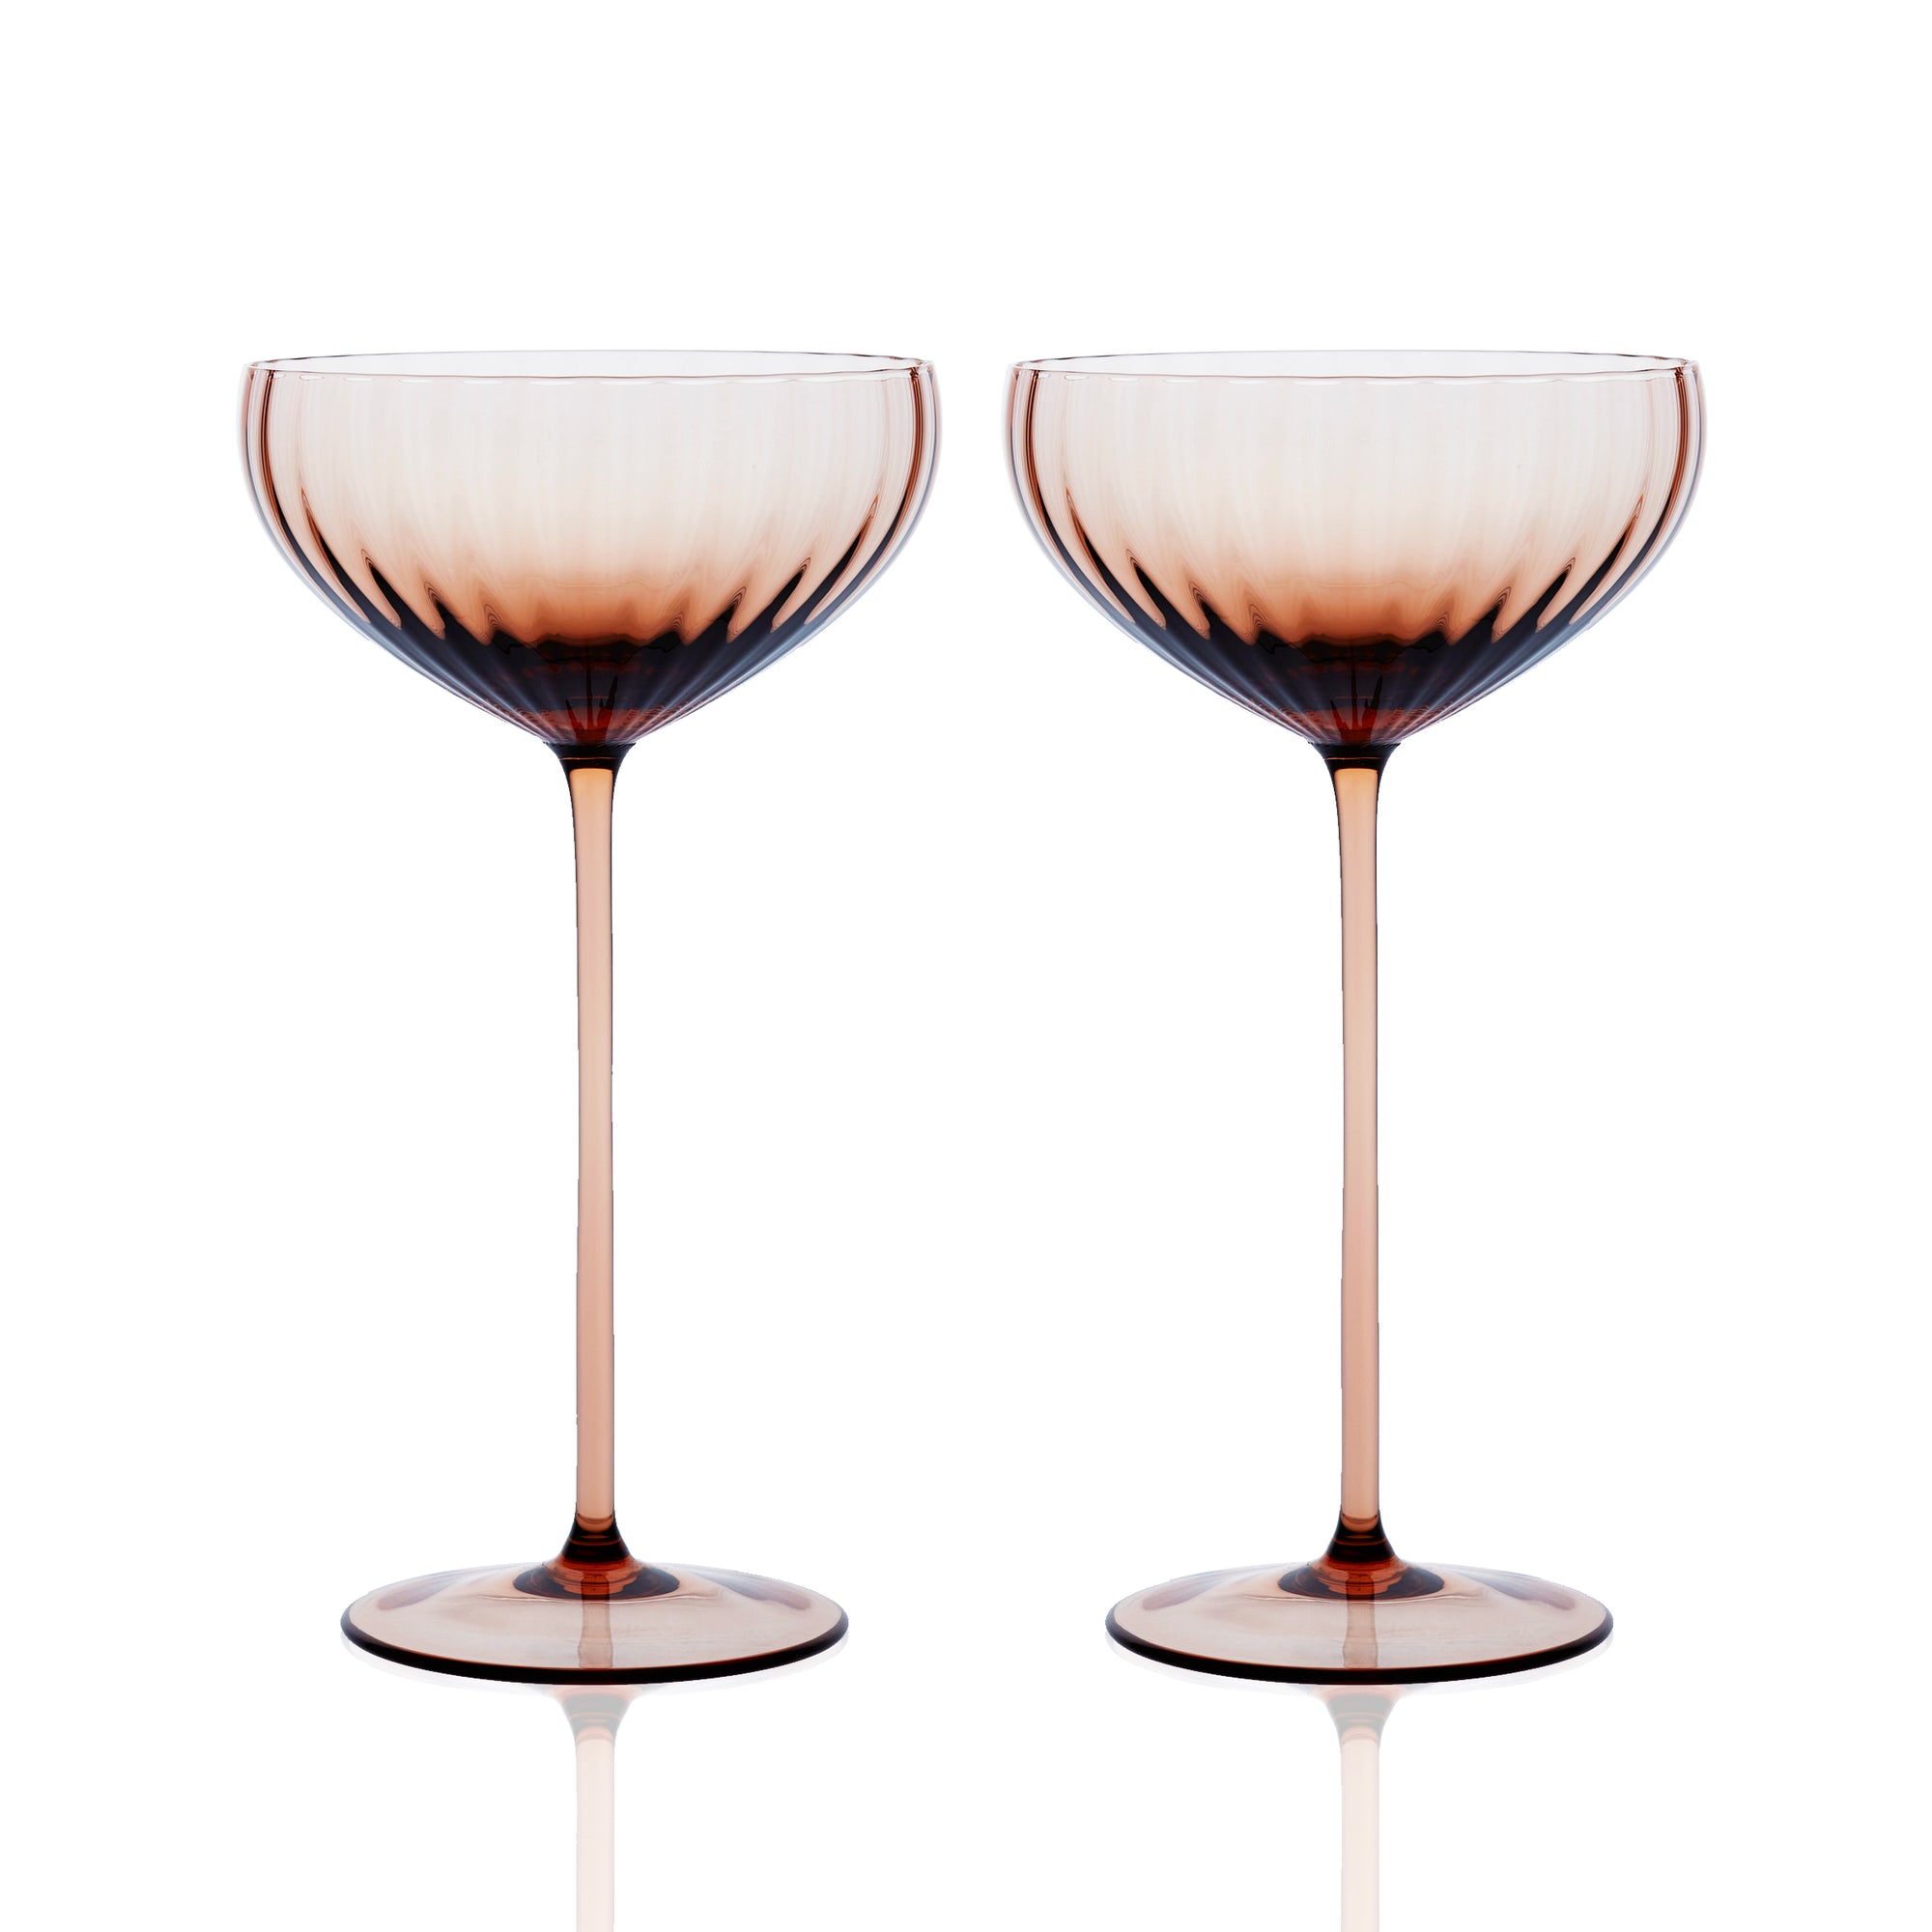 Caskata Chatham Bloom Coupe Cocktail Glasses Set of 2